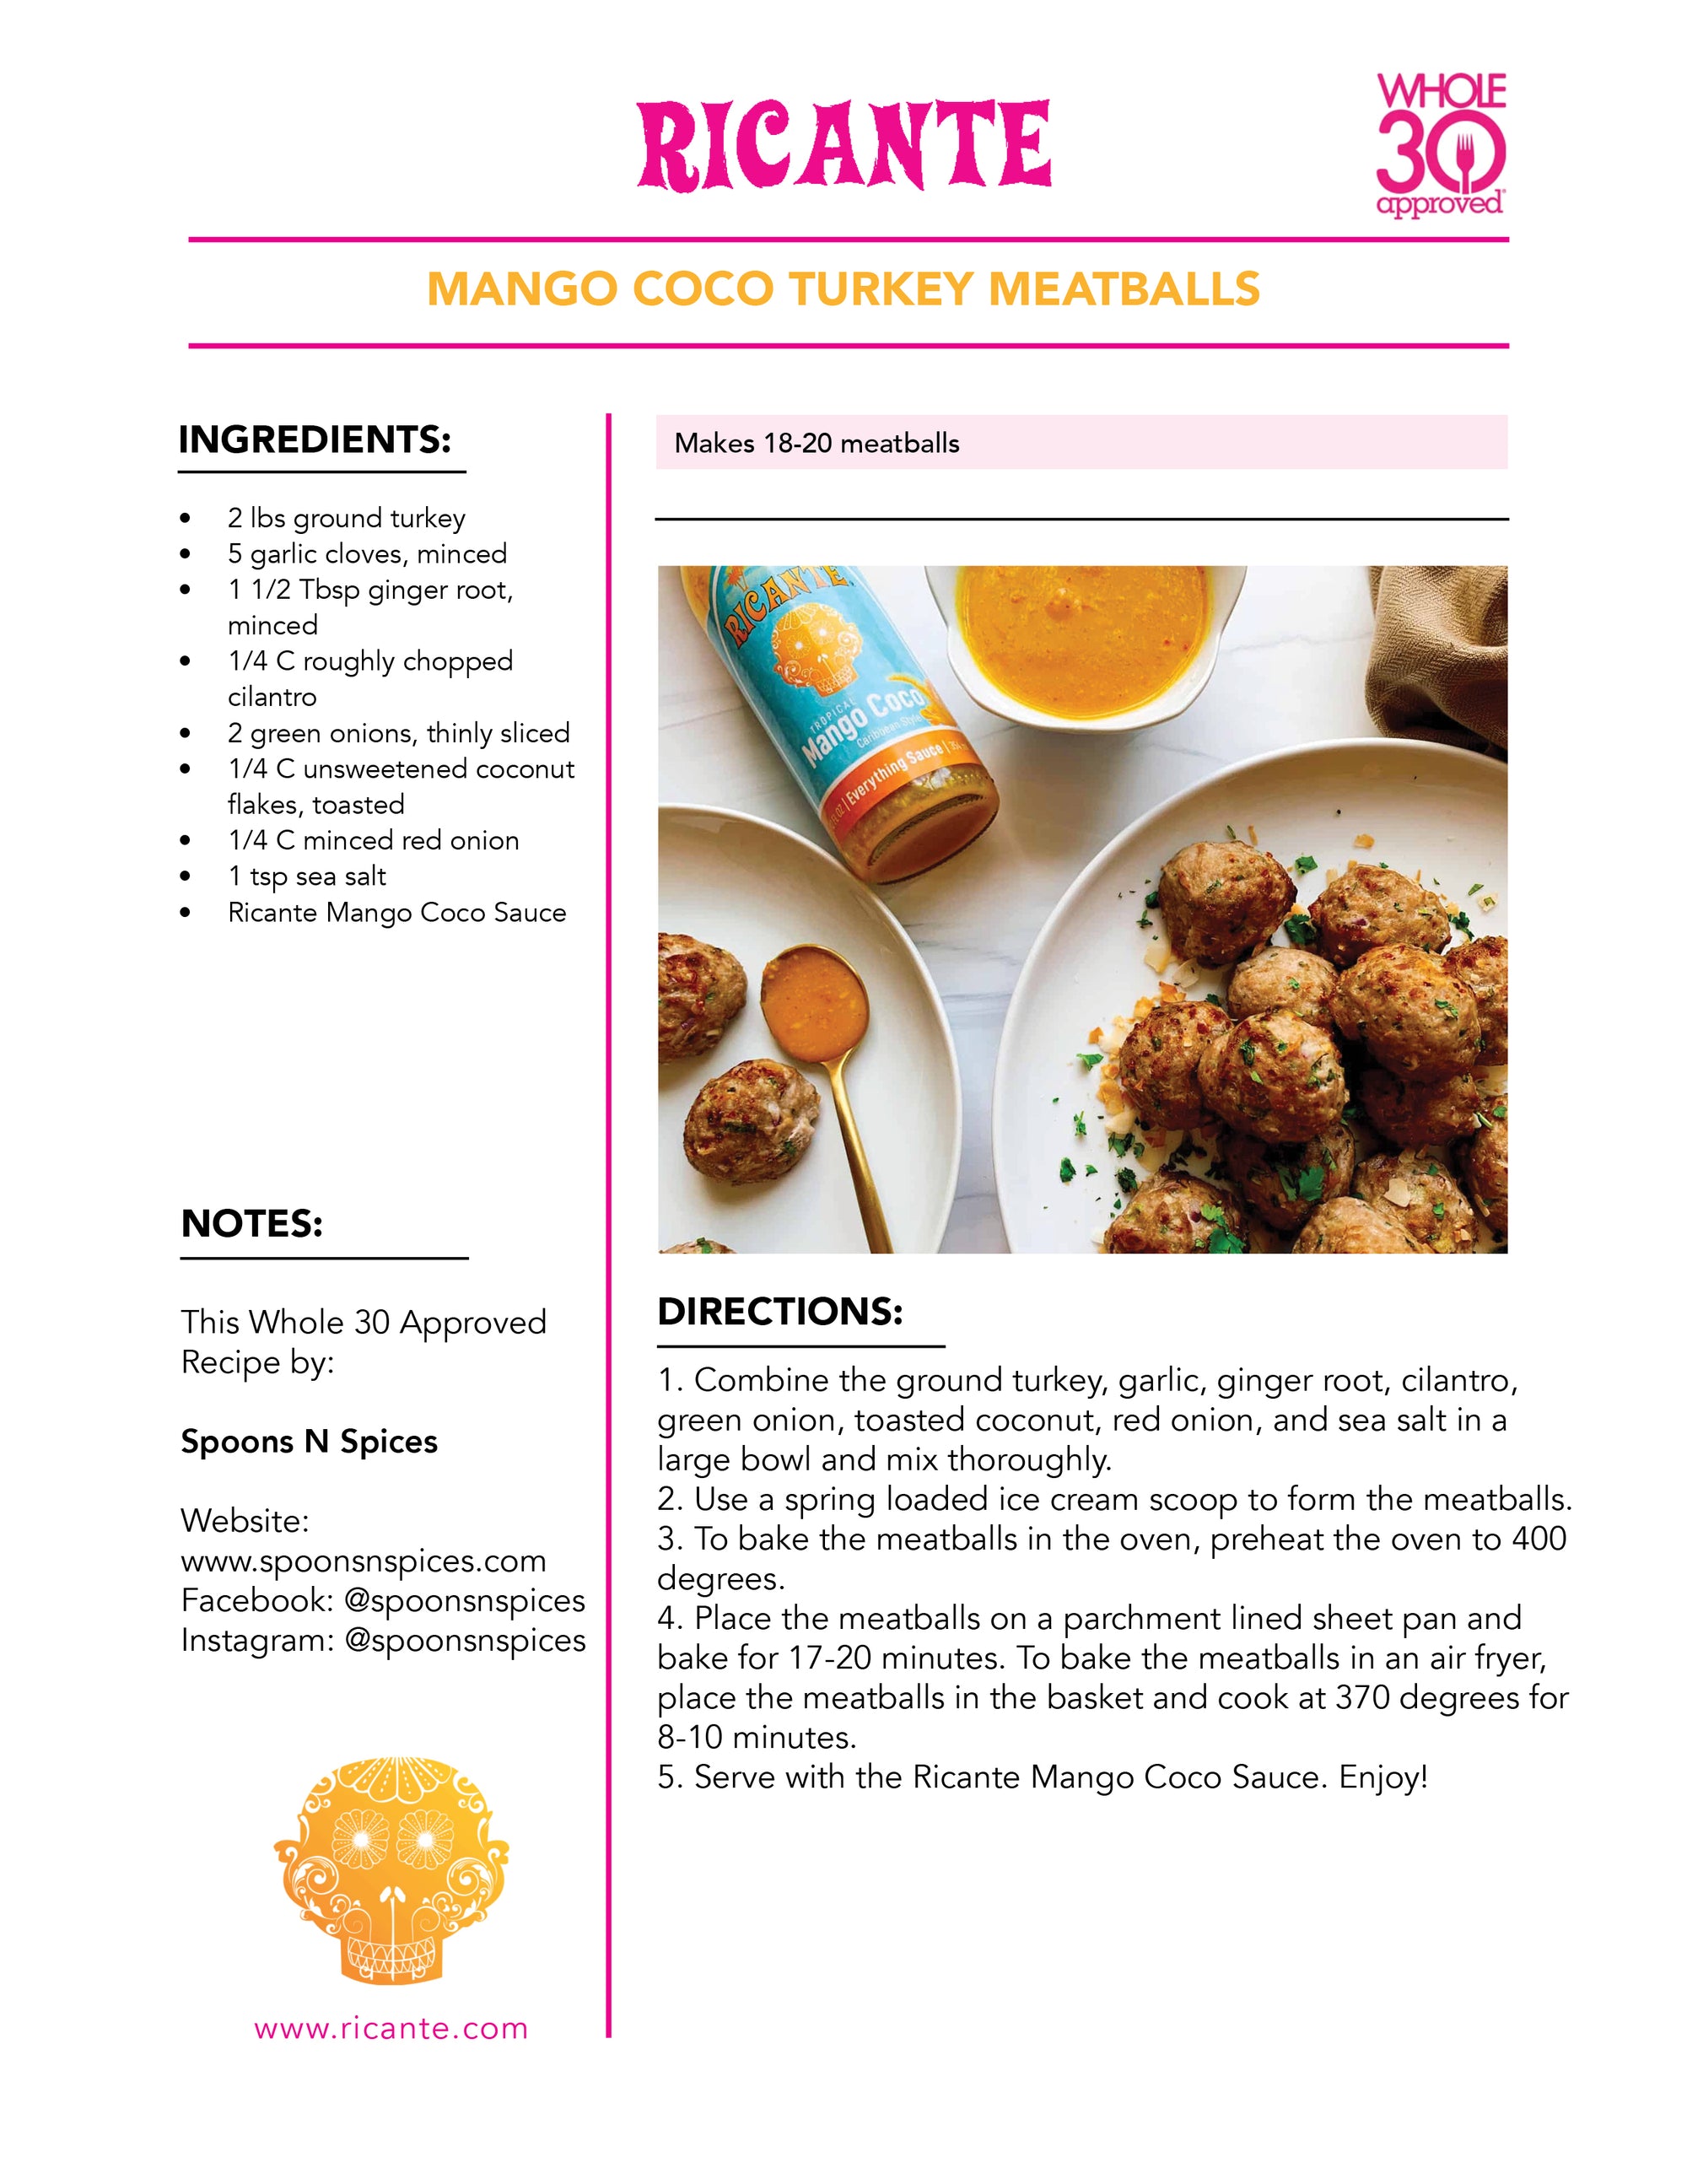 Whole30 - Mango Coco Turkey Meatballs